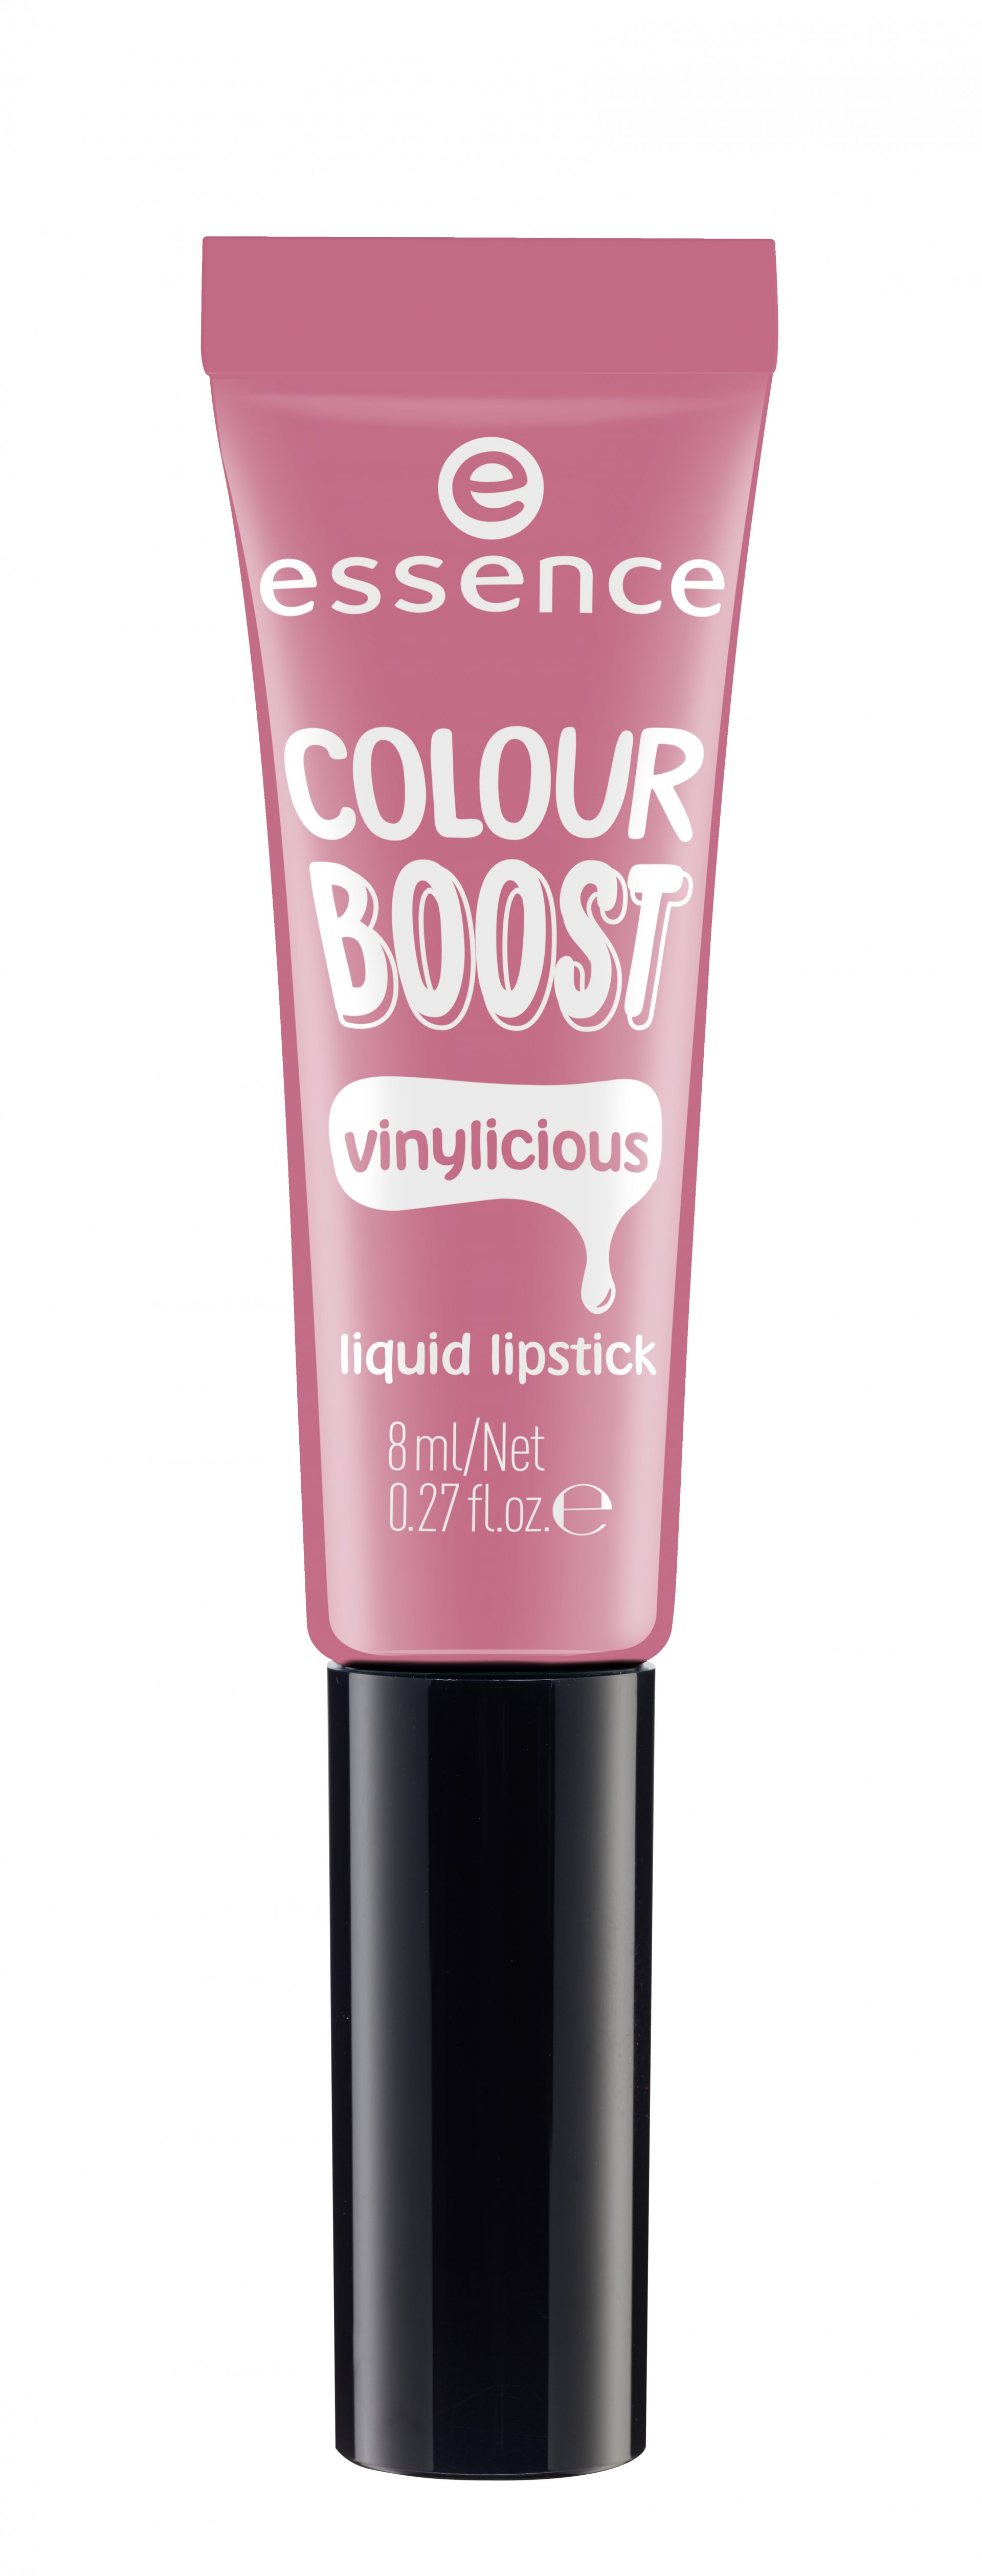 essence colour boost vinylicious liquid lipstick 03 - เอสเซนส์คัลเลอร์บูสท์ไวนิลลิเชียสลิควิดลิปสติก 03